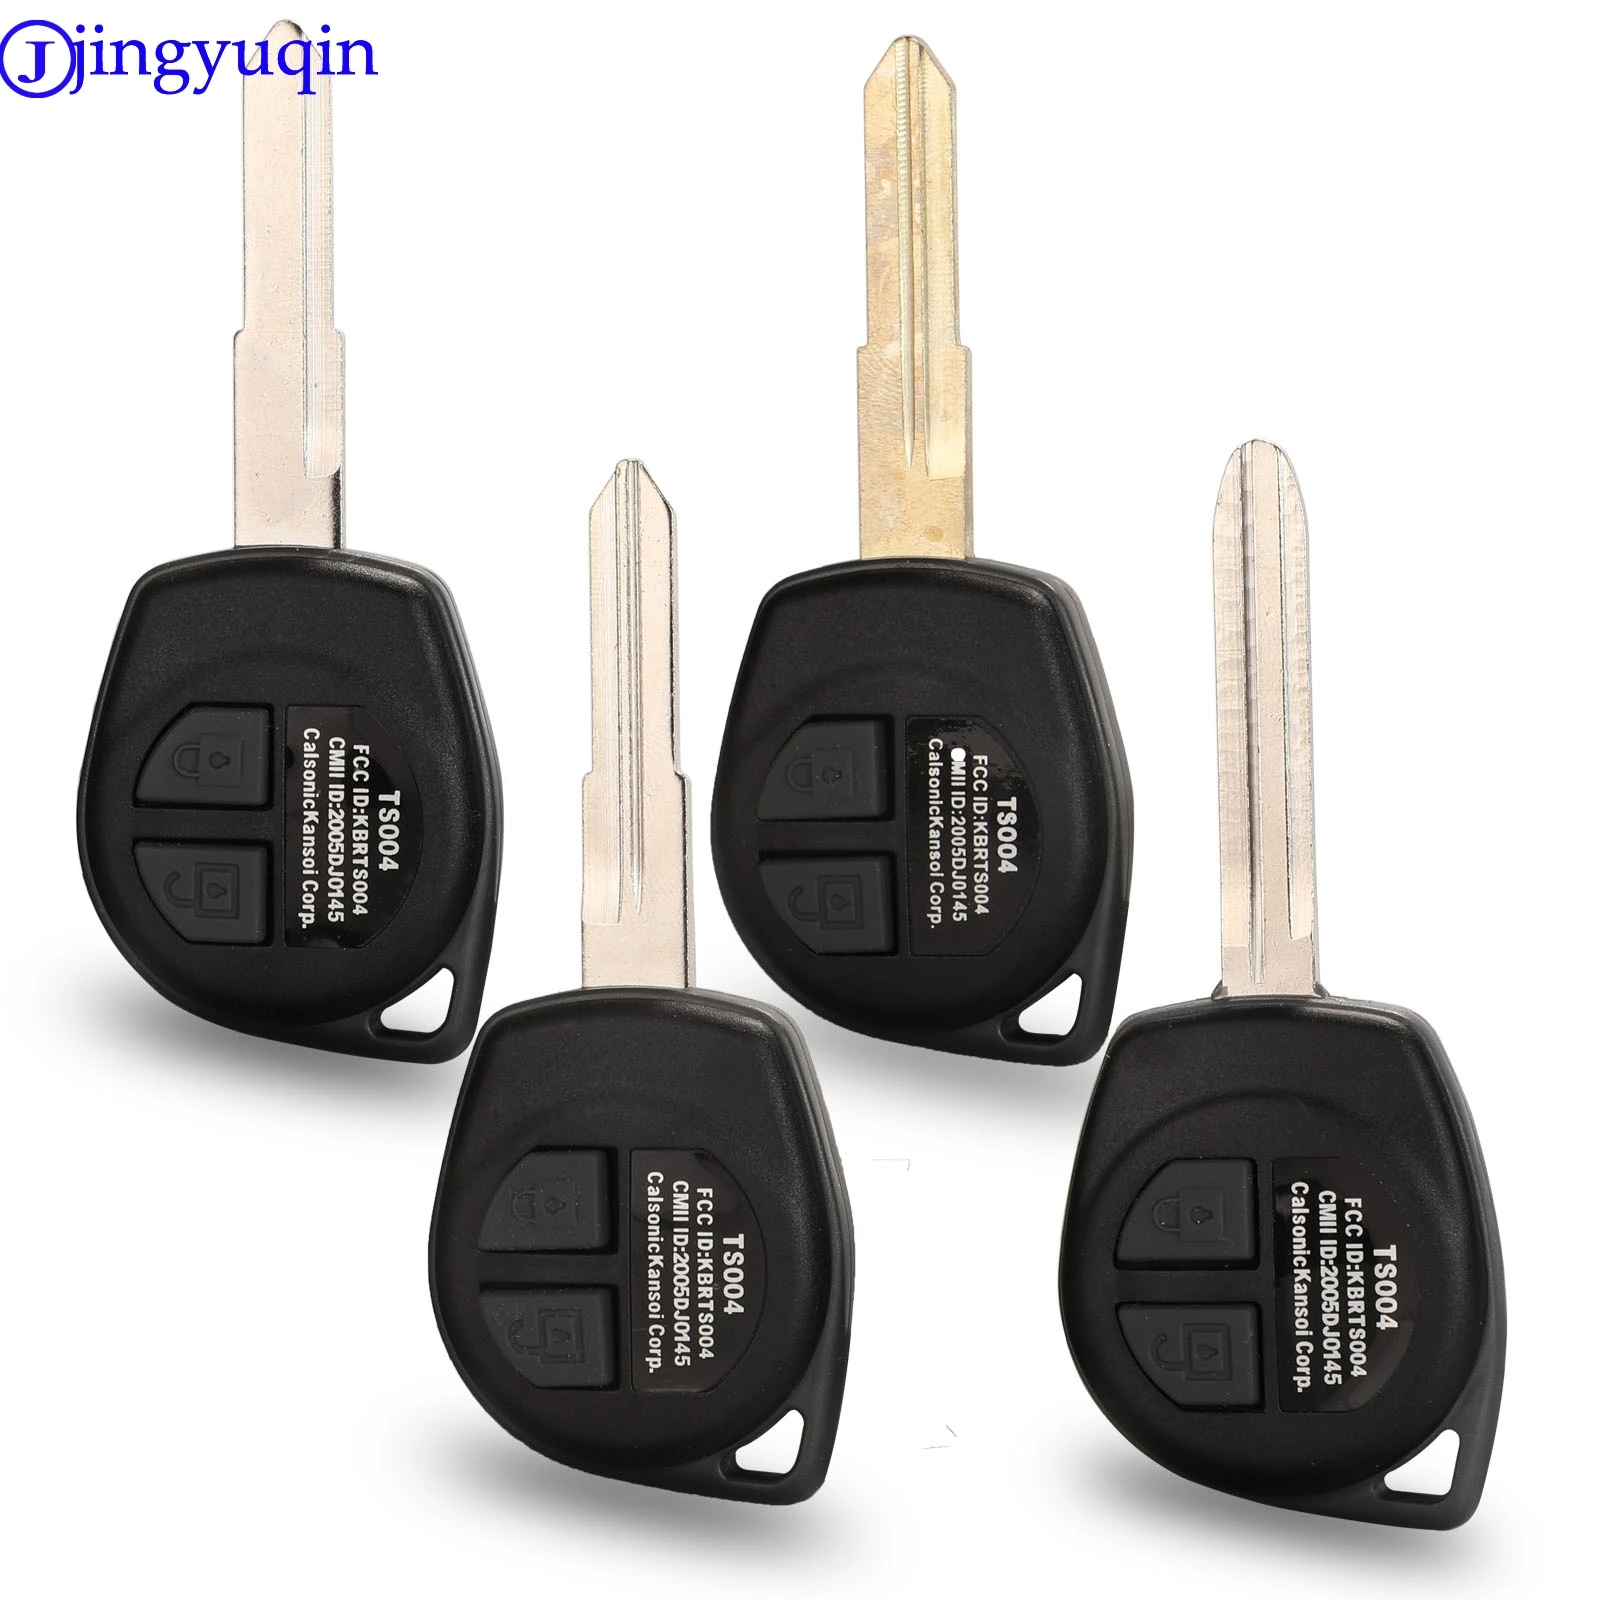 

jingyuqin 2 Buttons Car Key Shell Fob Case+Rubber Pad For Suzuki Swift Grand SX4 Liana Aerio Vitara GRAND VITARA ALTO Jimny key